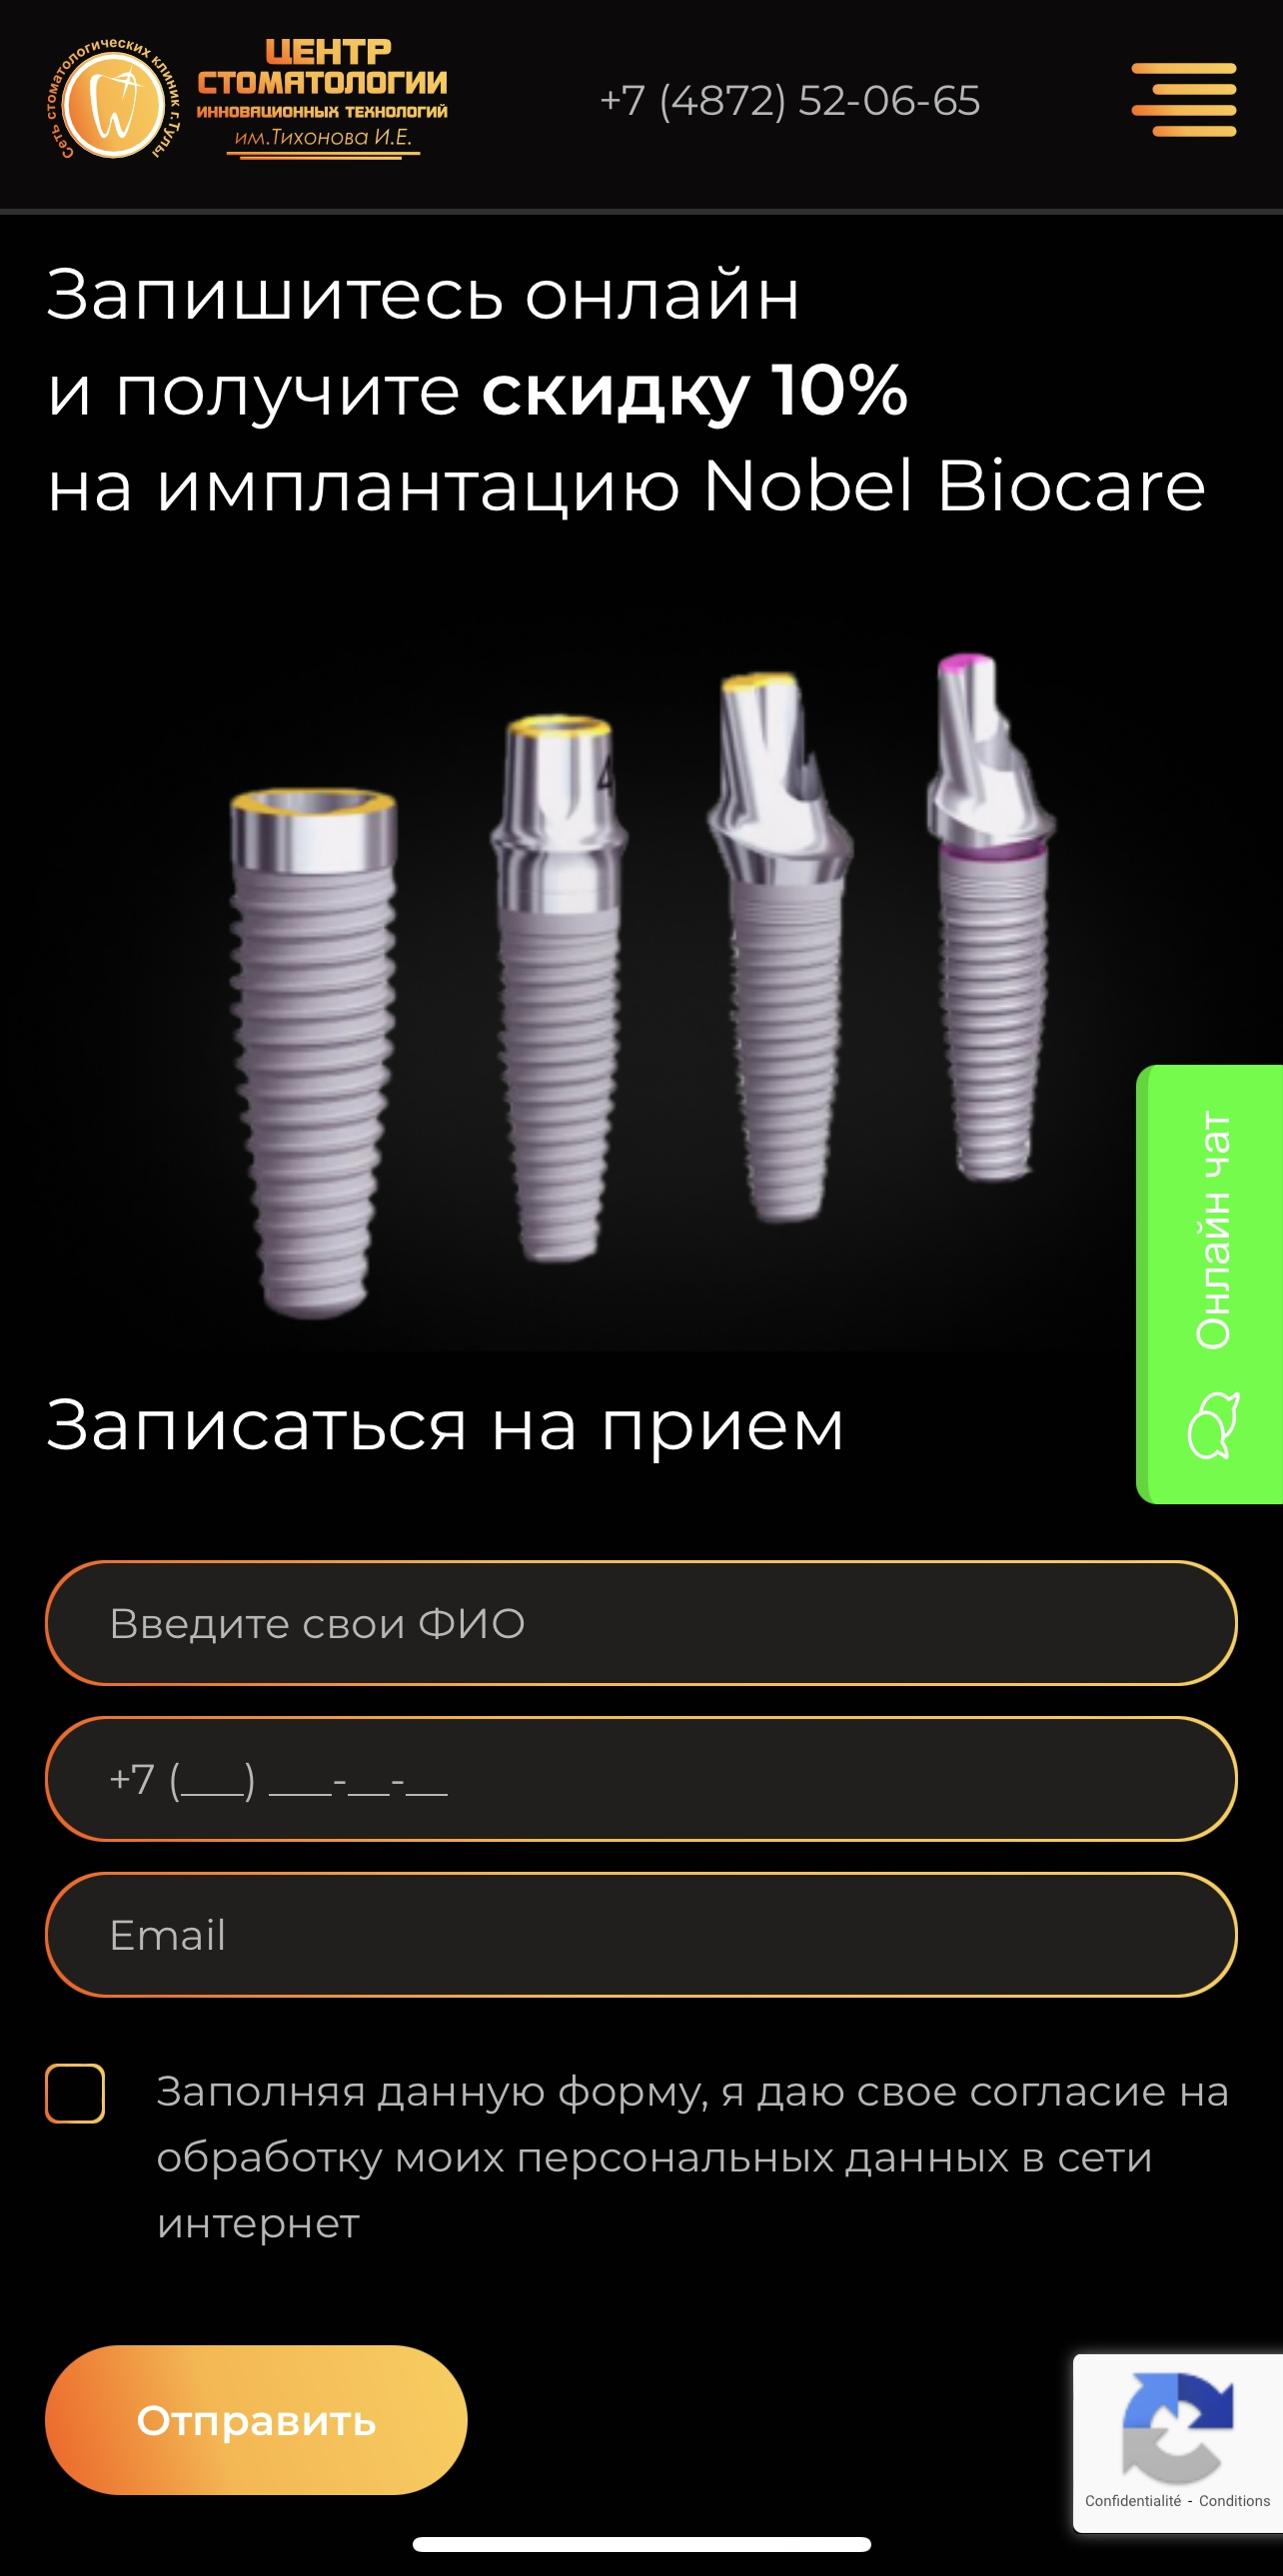 implantnobel.tuladent.ru / Форма записи